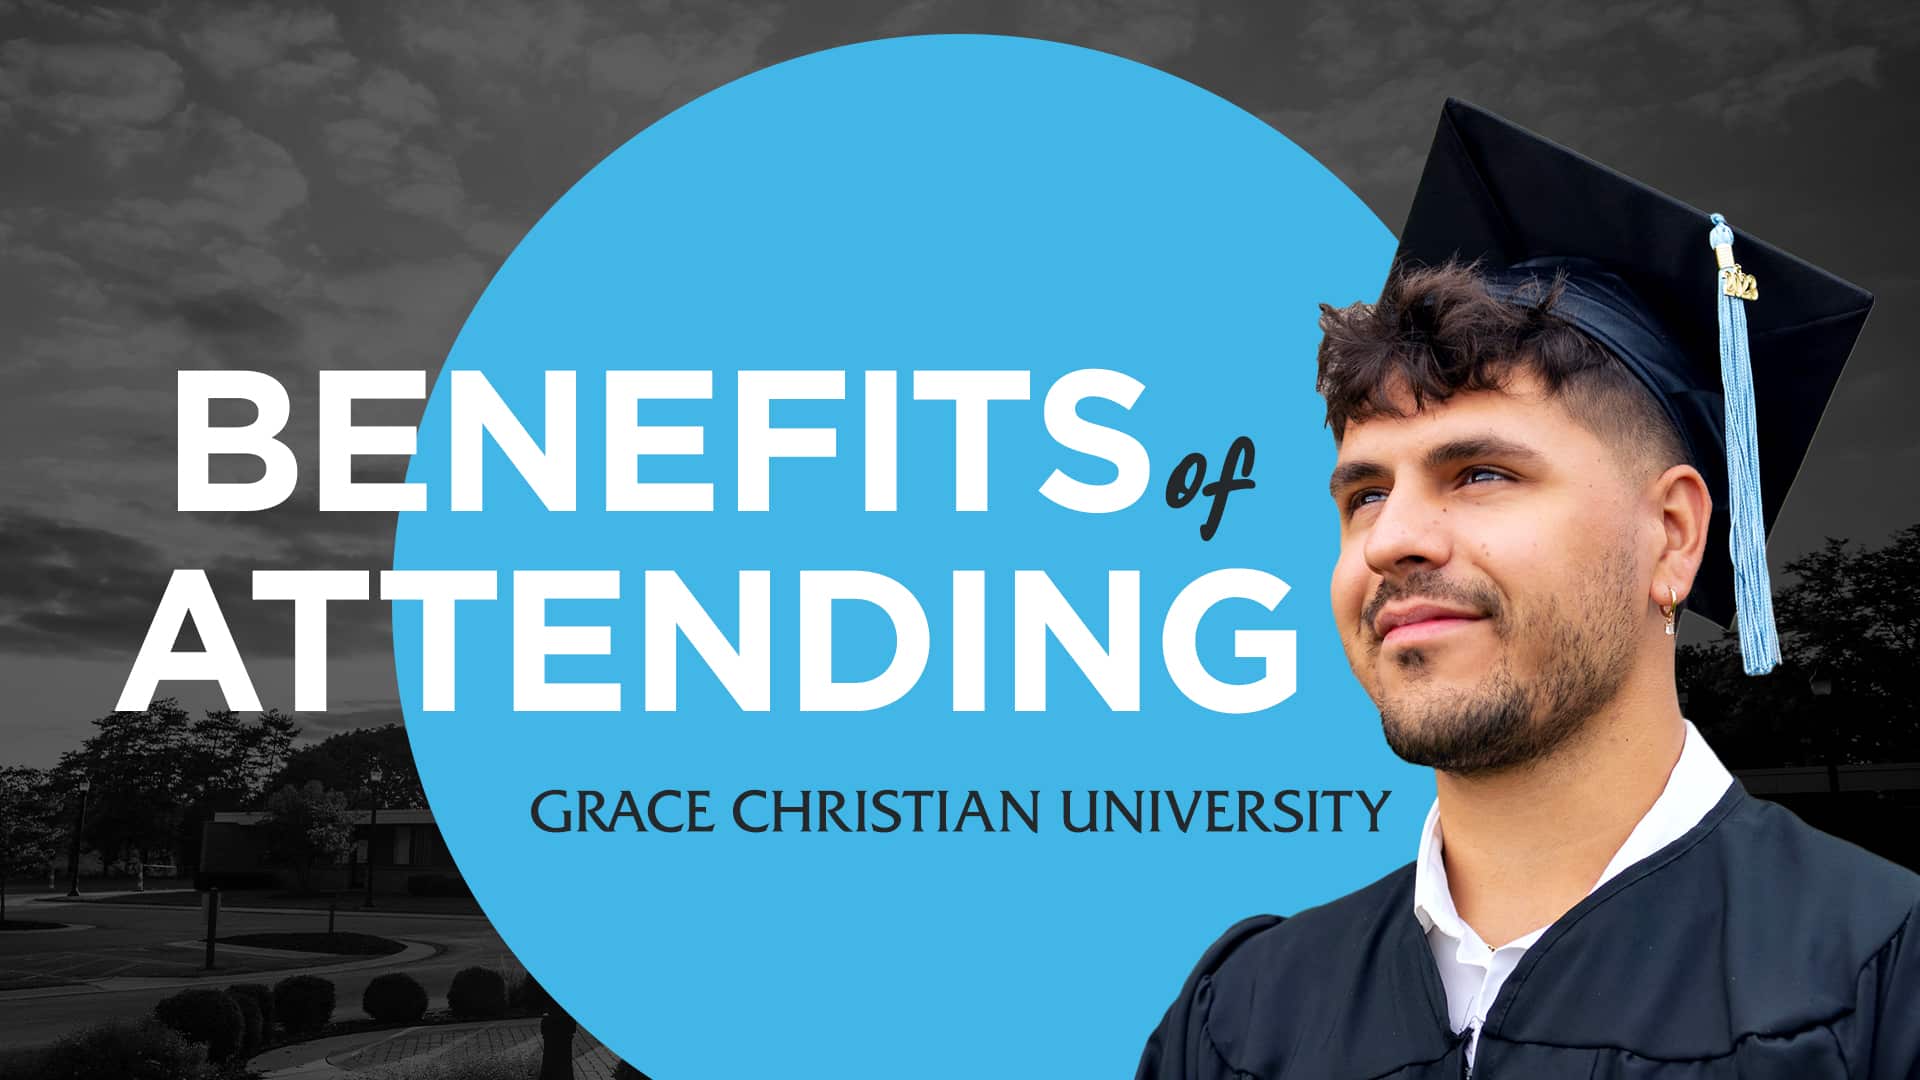 Benefits of Attending - Grace Christian University